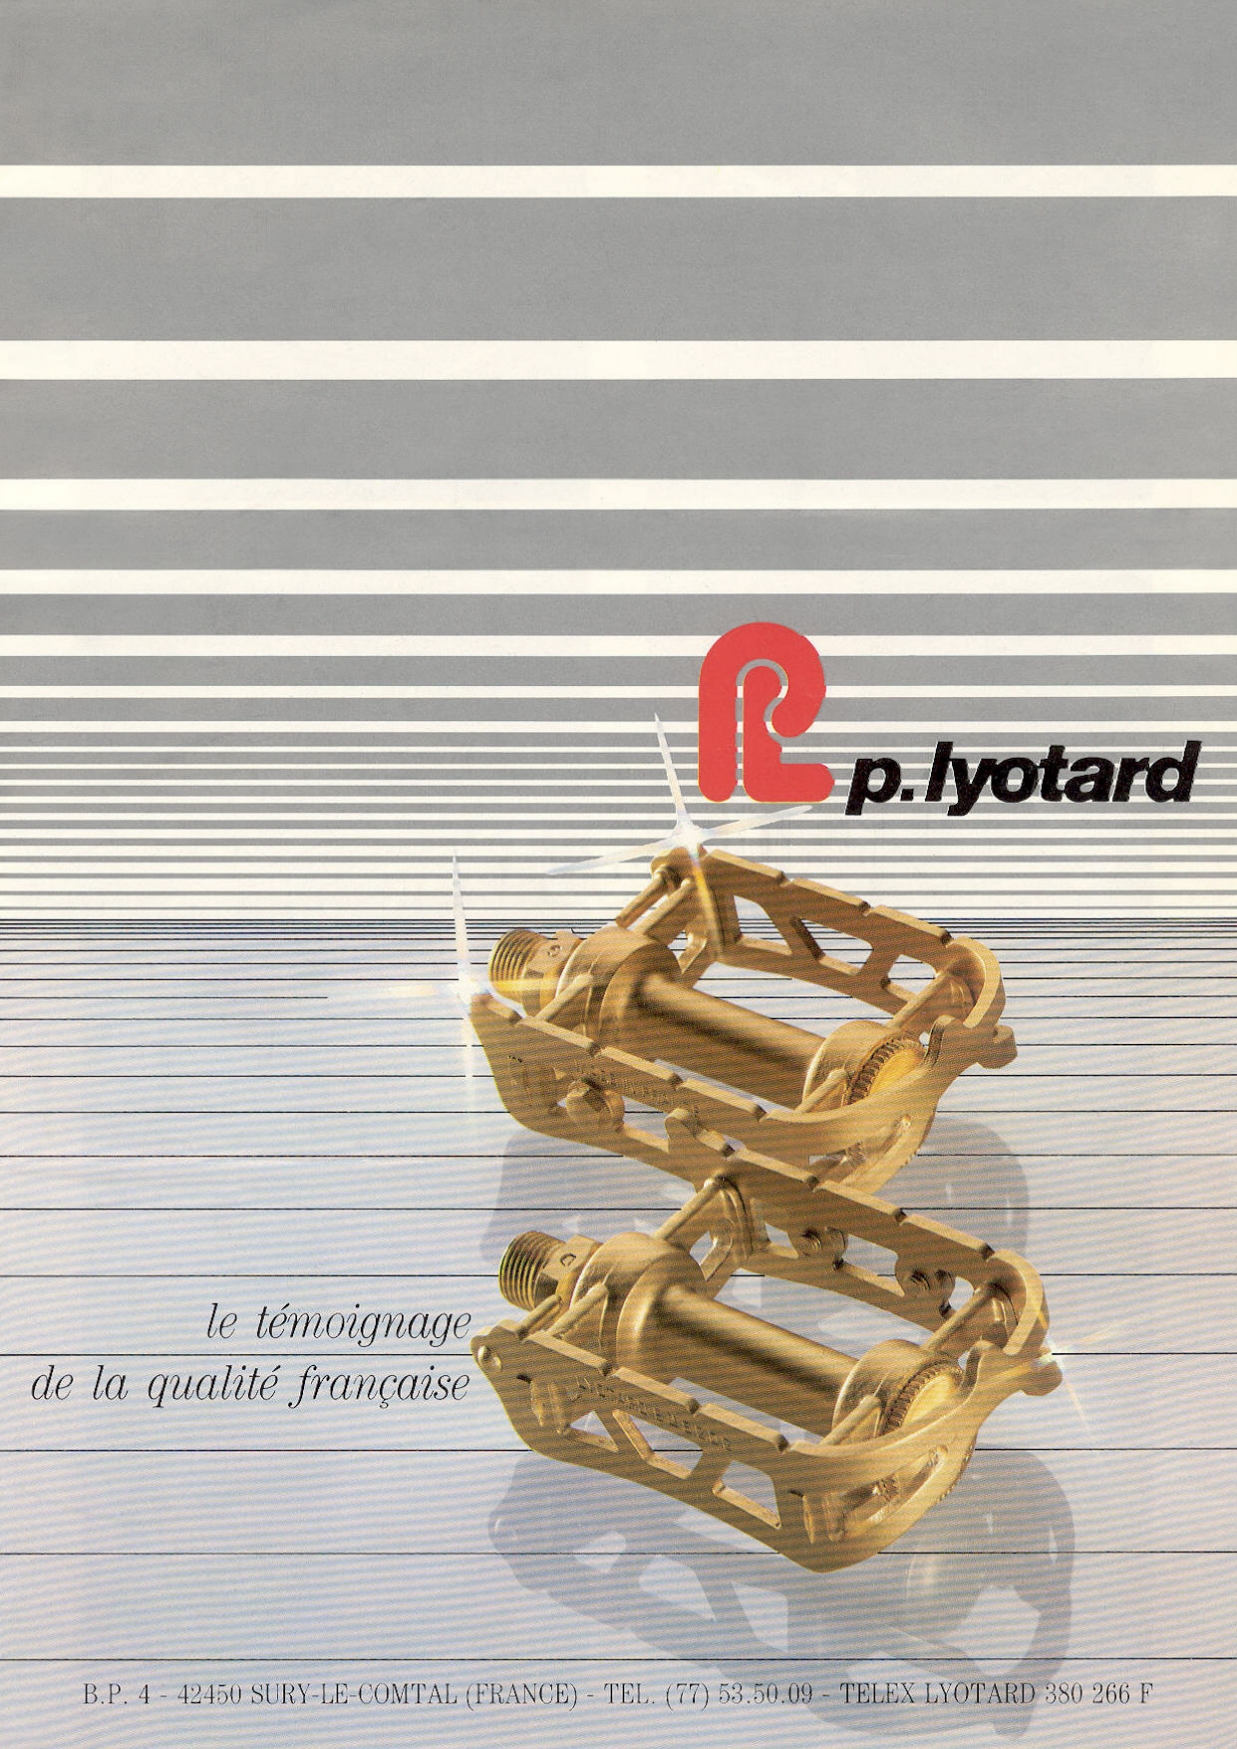 Lyotard catalog (06-1977)